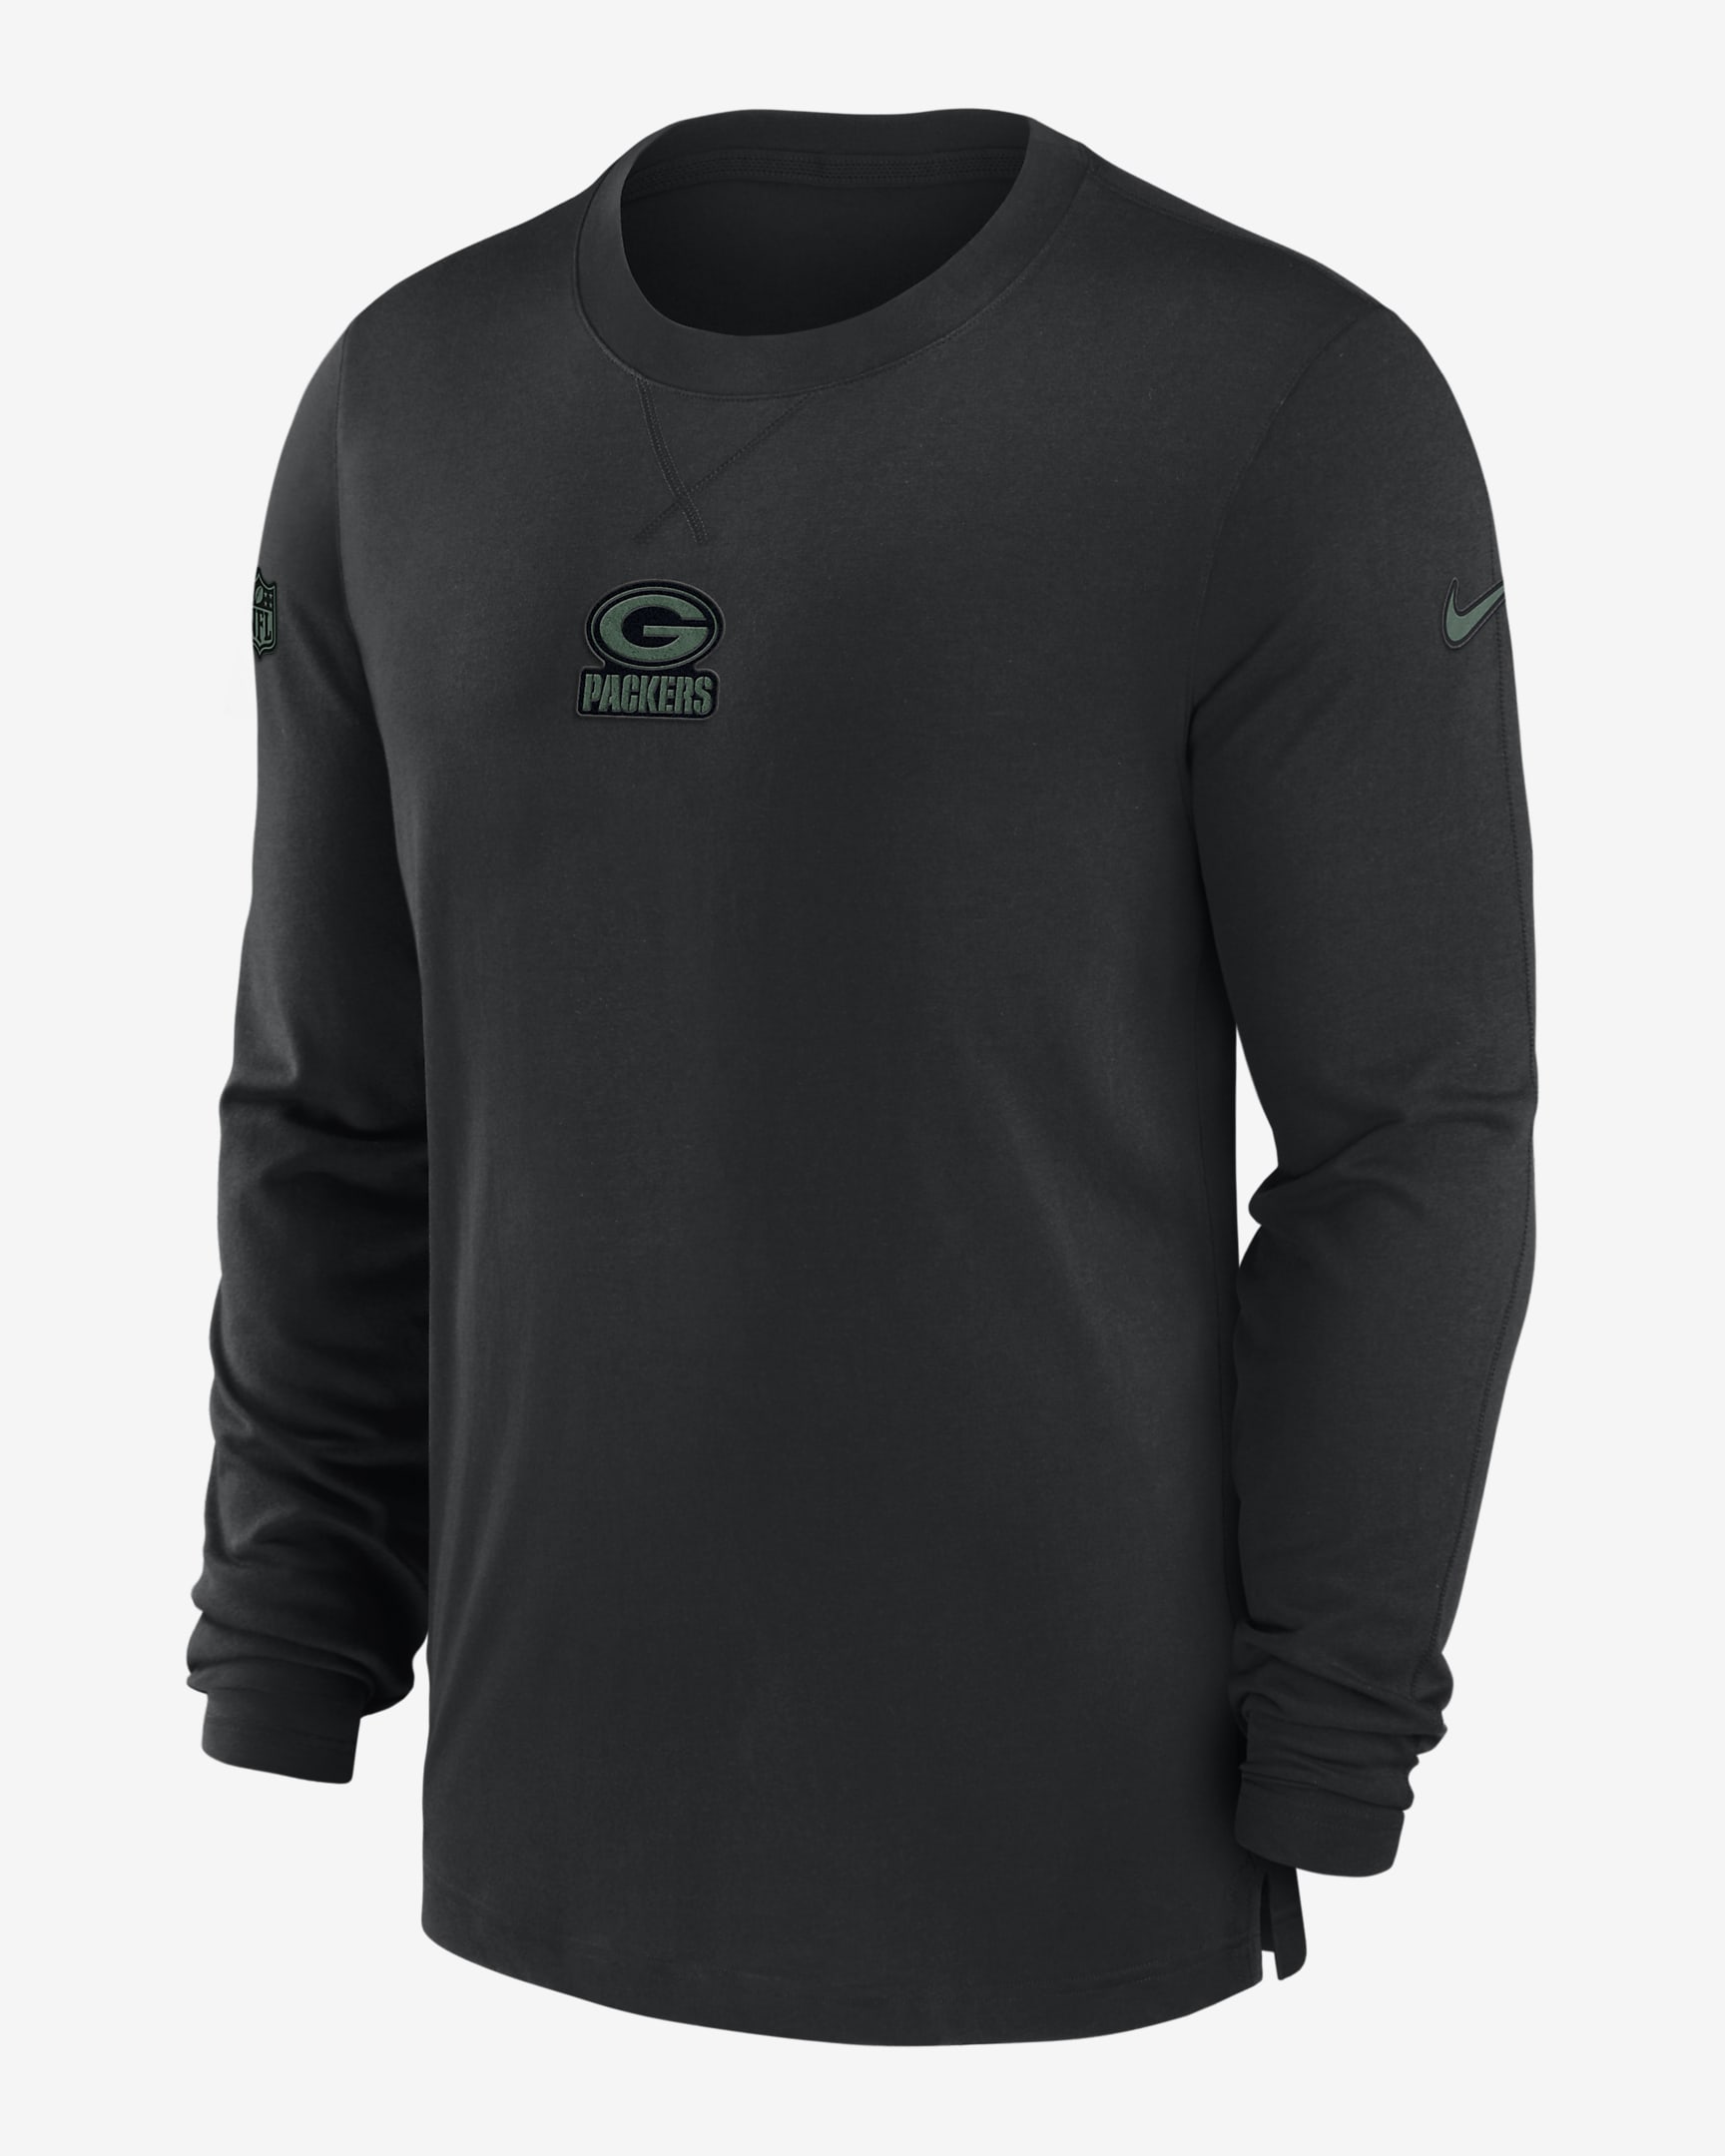 Green Bay Packers Sideline Men’s Nike Dri-FIT NFL Long-Sleeve Top. Nike.com